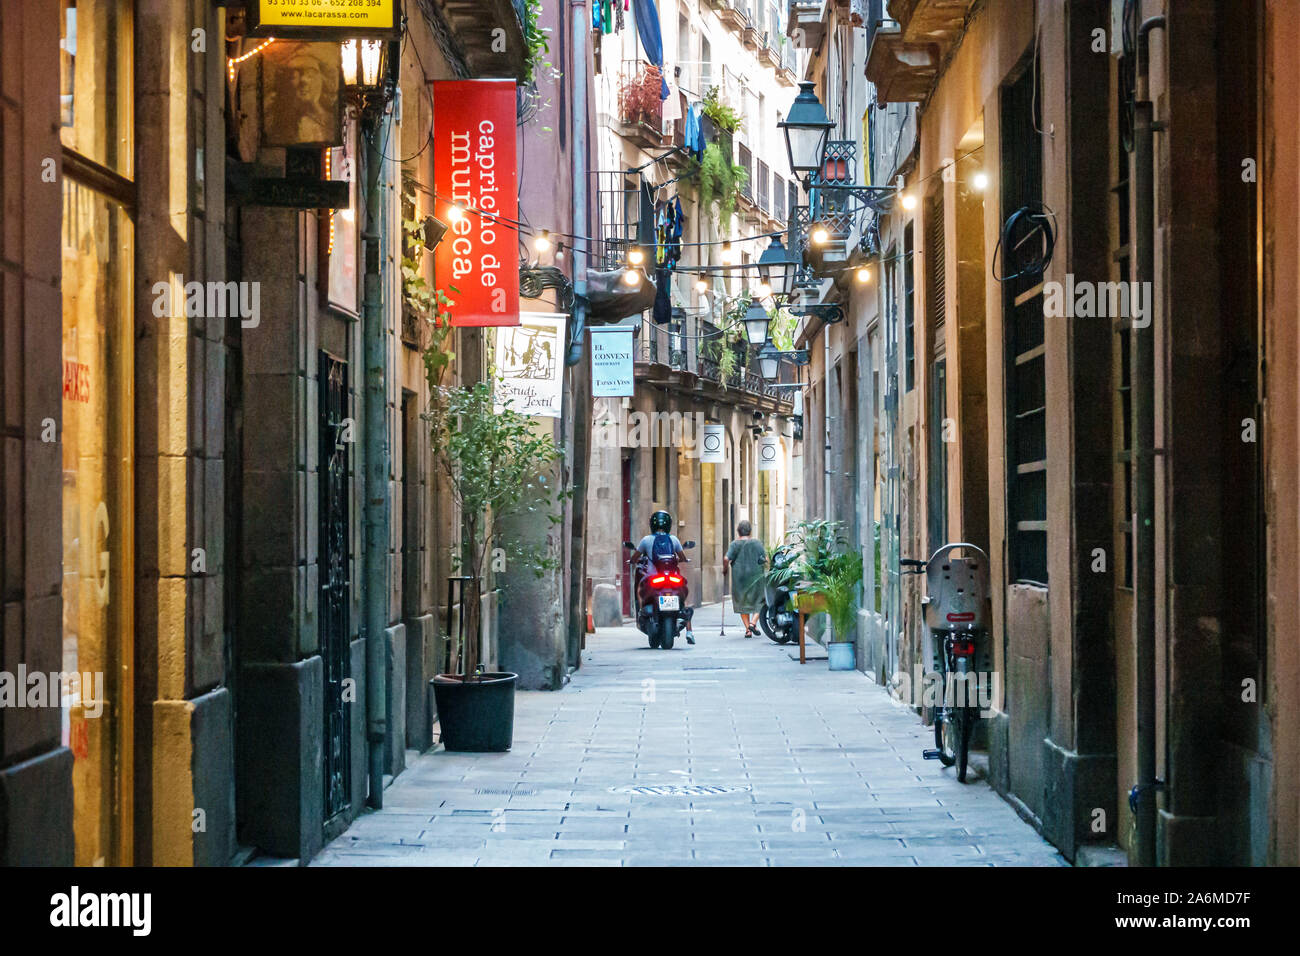 Barcelone Espagne,Catalogne Ciutat Vella,centre historique,El Born,Carrer del Brosoli,rue étroite,enseignes,femme,homme,moto,ES190903169 Banque D'Images